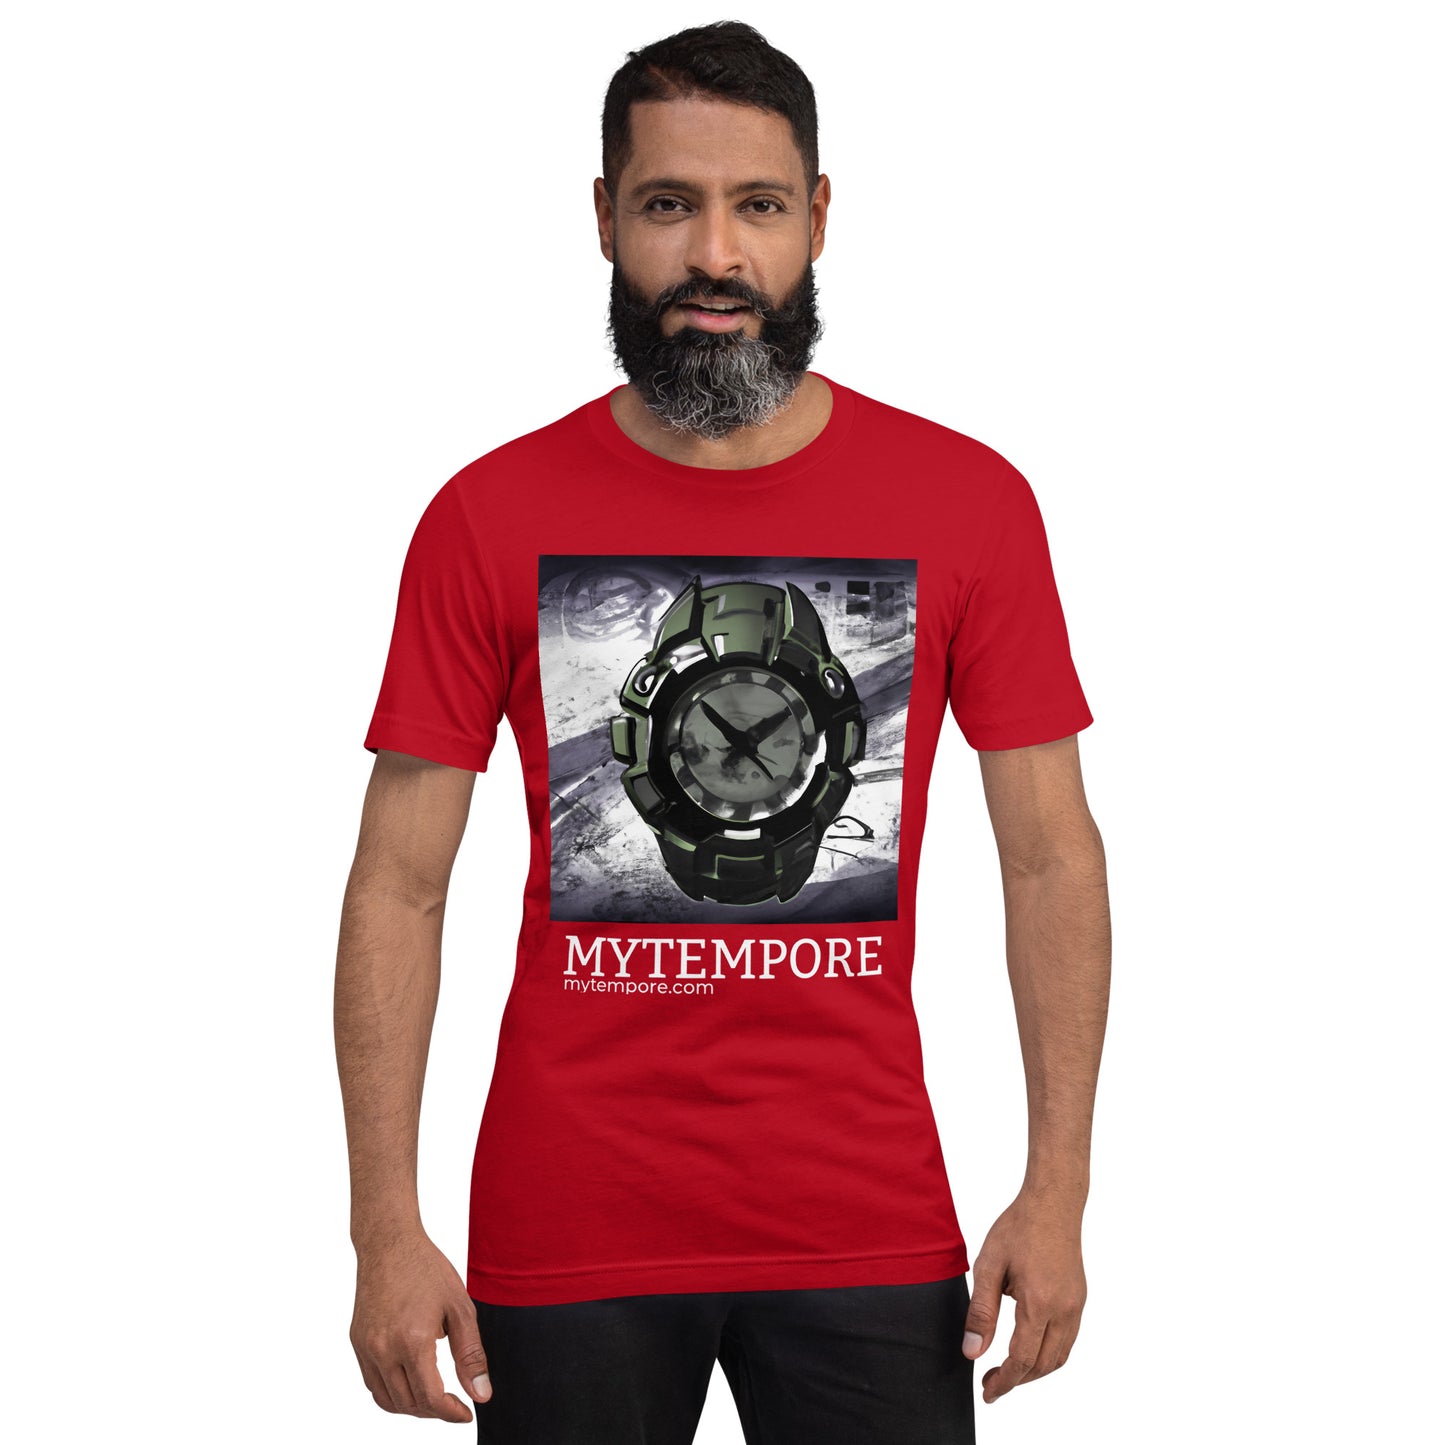 "MYTEMPORE" GREEN ANALOG WATCH Unisex t-shirt